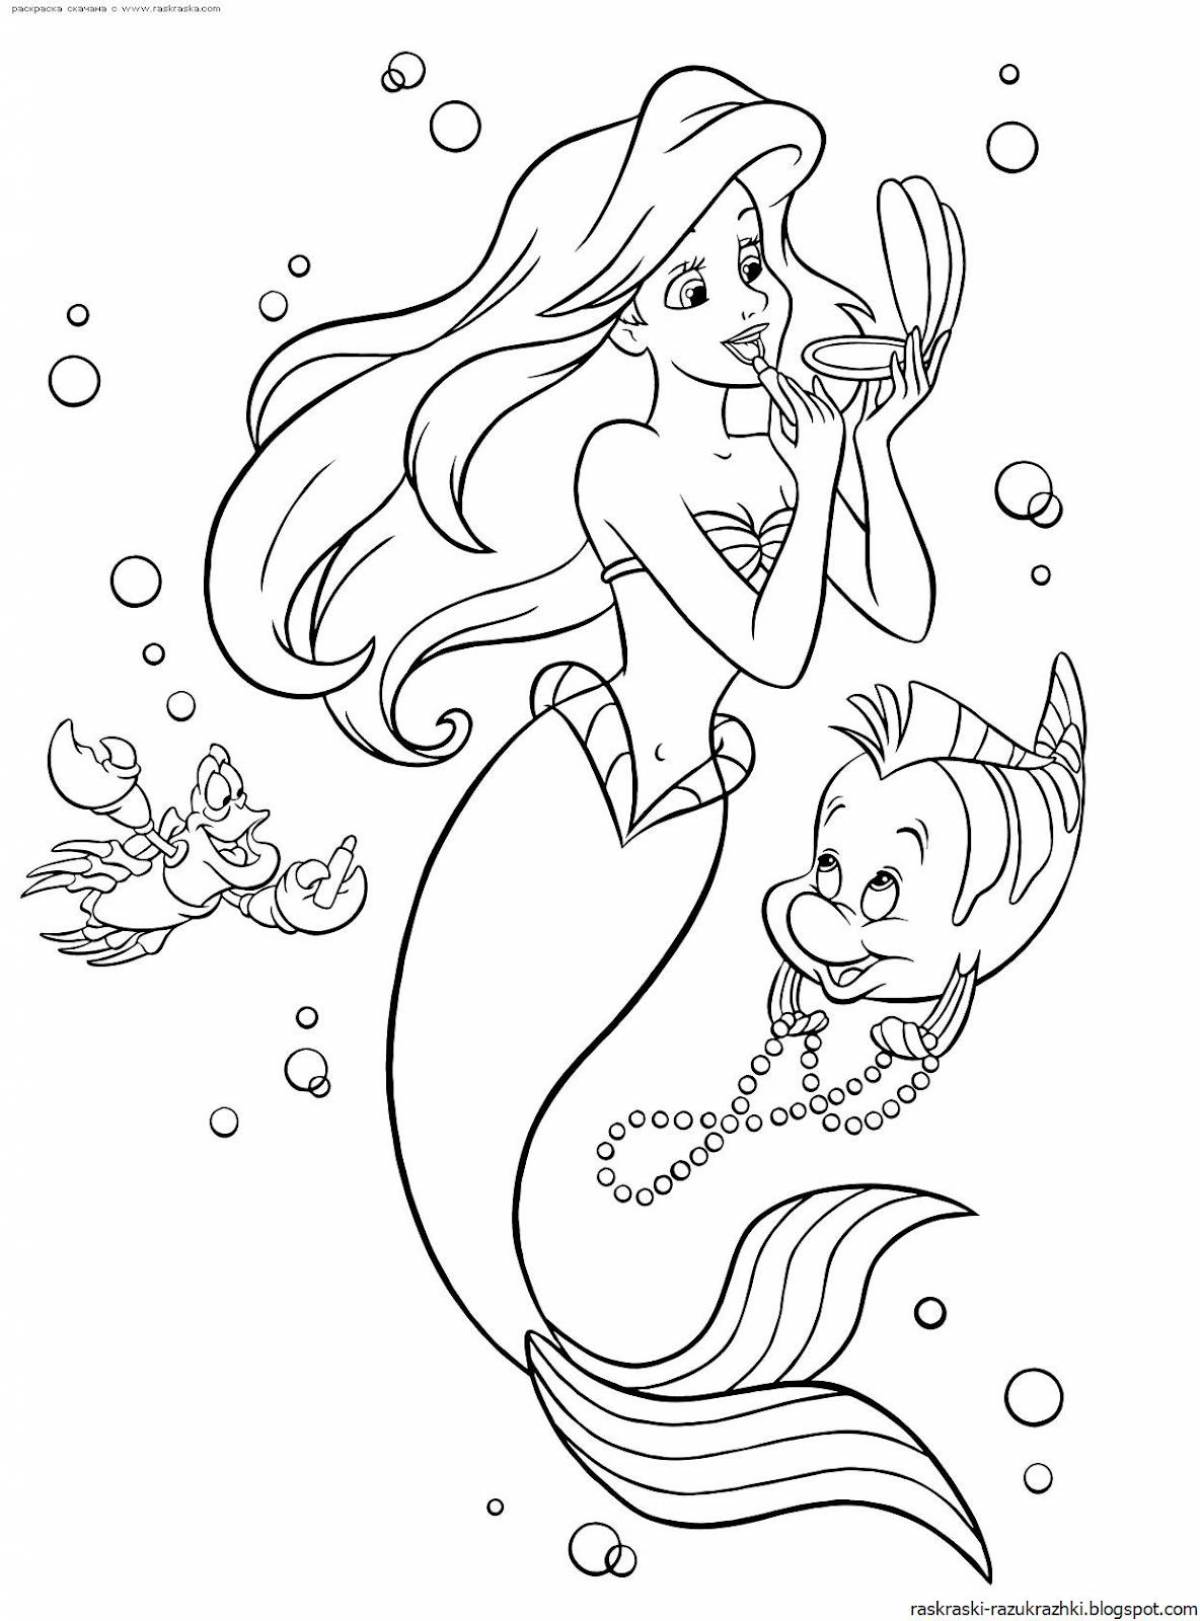 Amazing mermaid coloring book